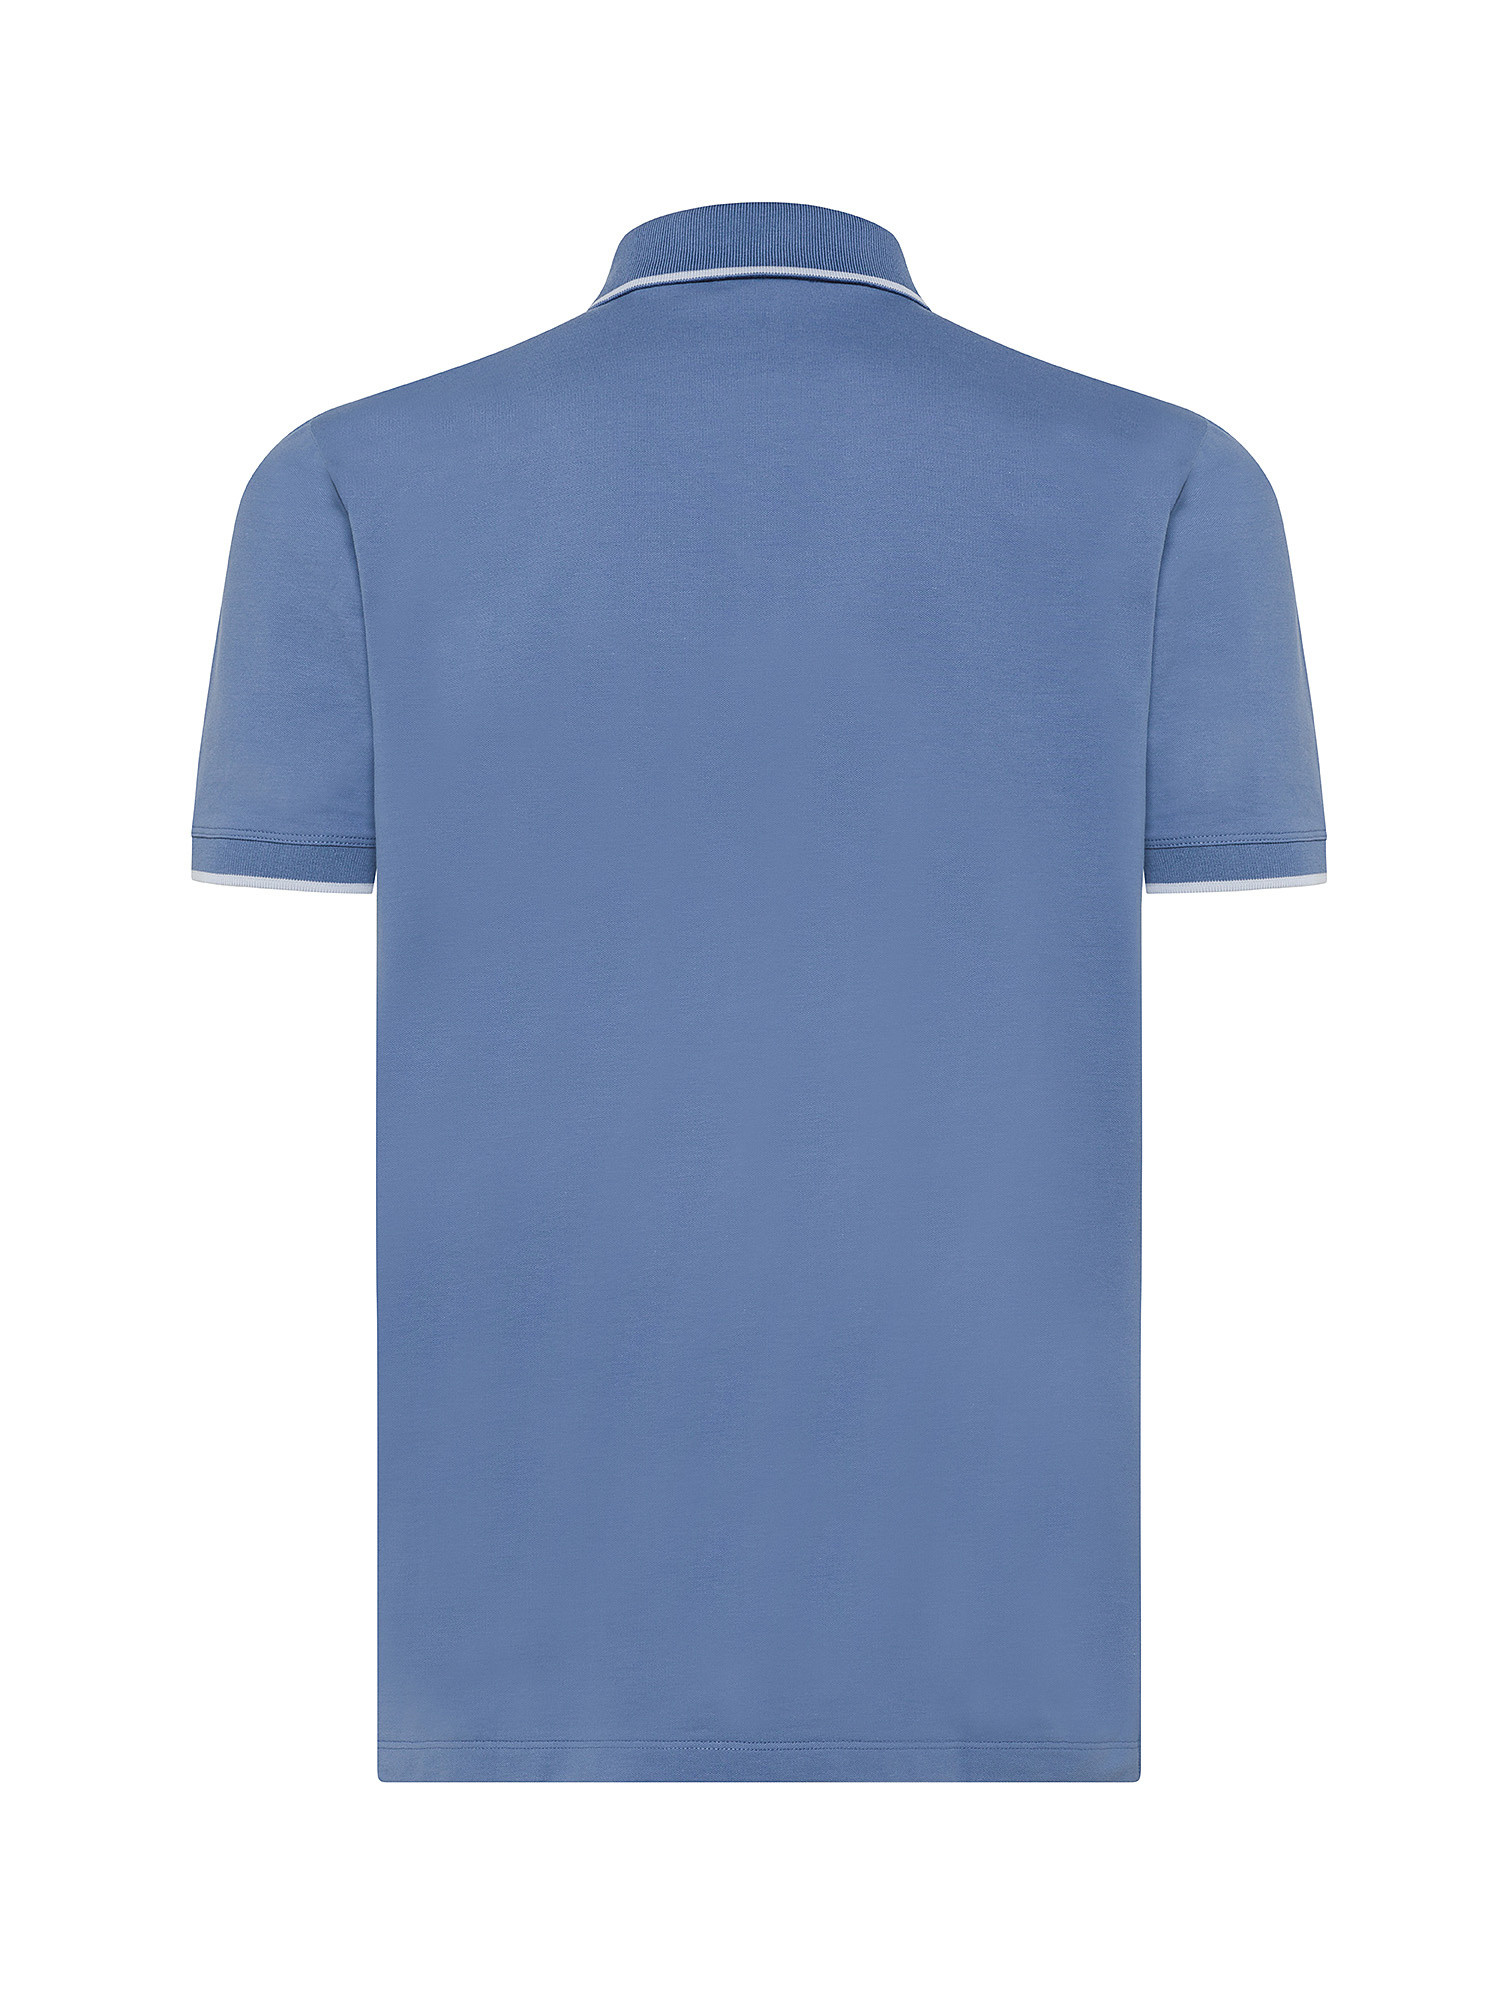 Hugo - Polo slim fit con logo in cotone, Azzurro, large image number 1